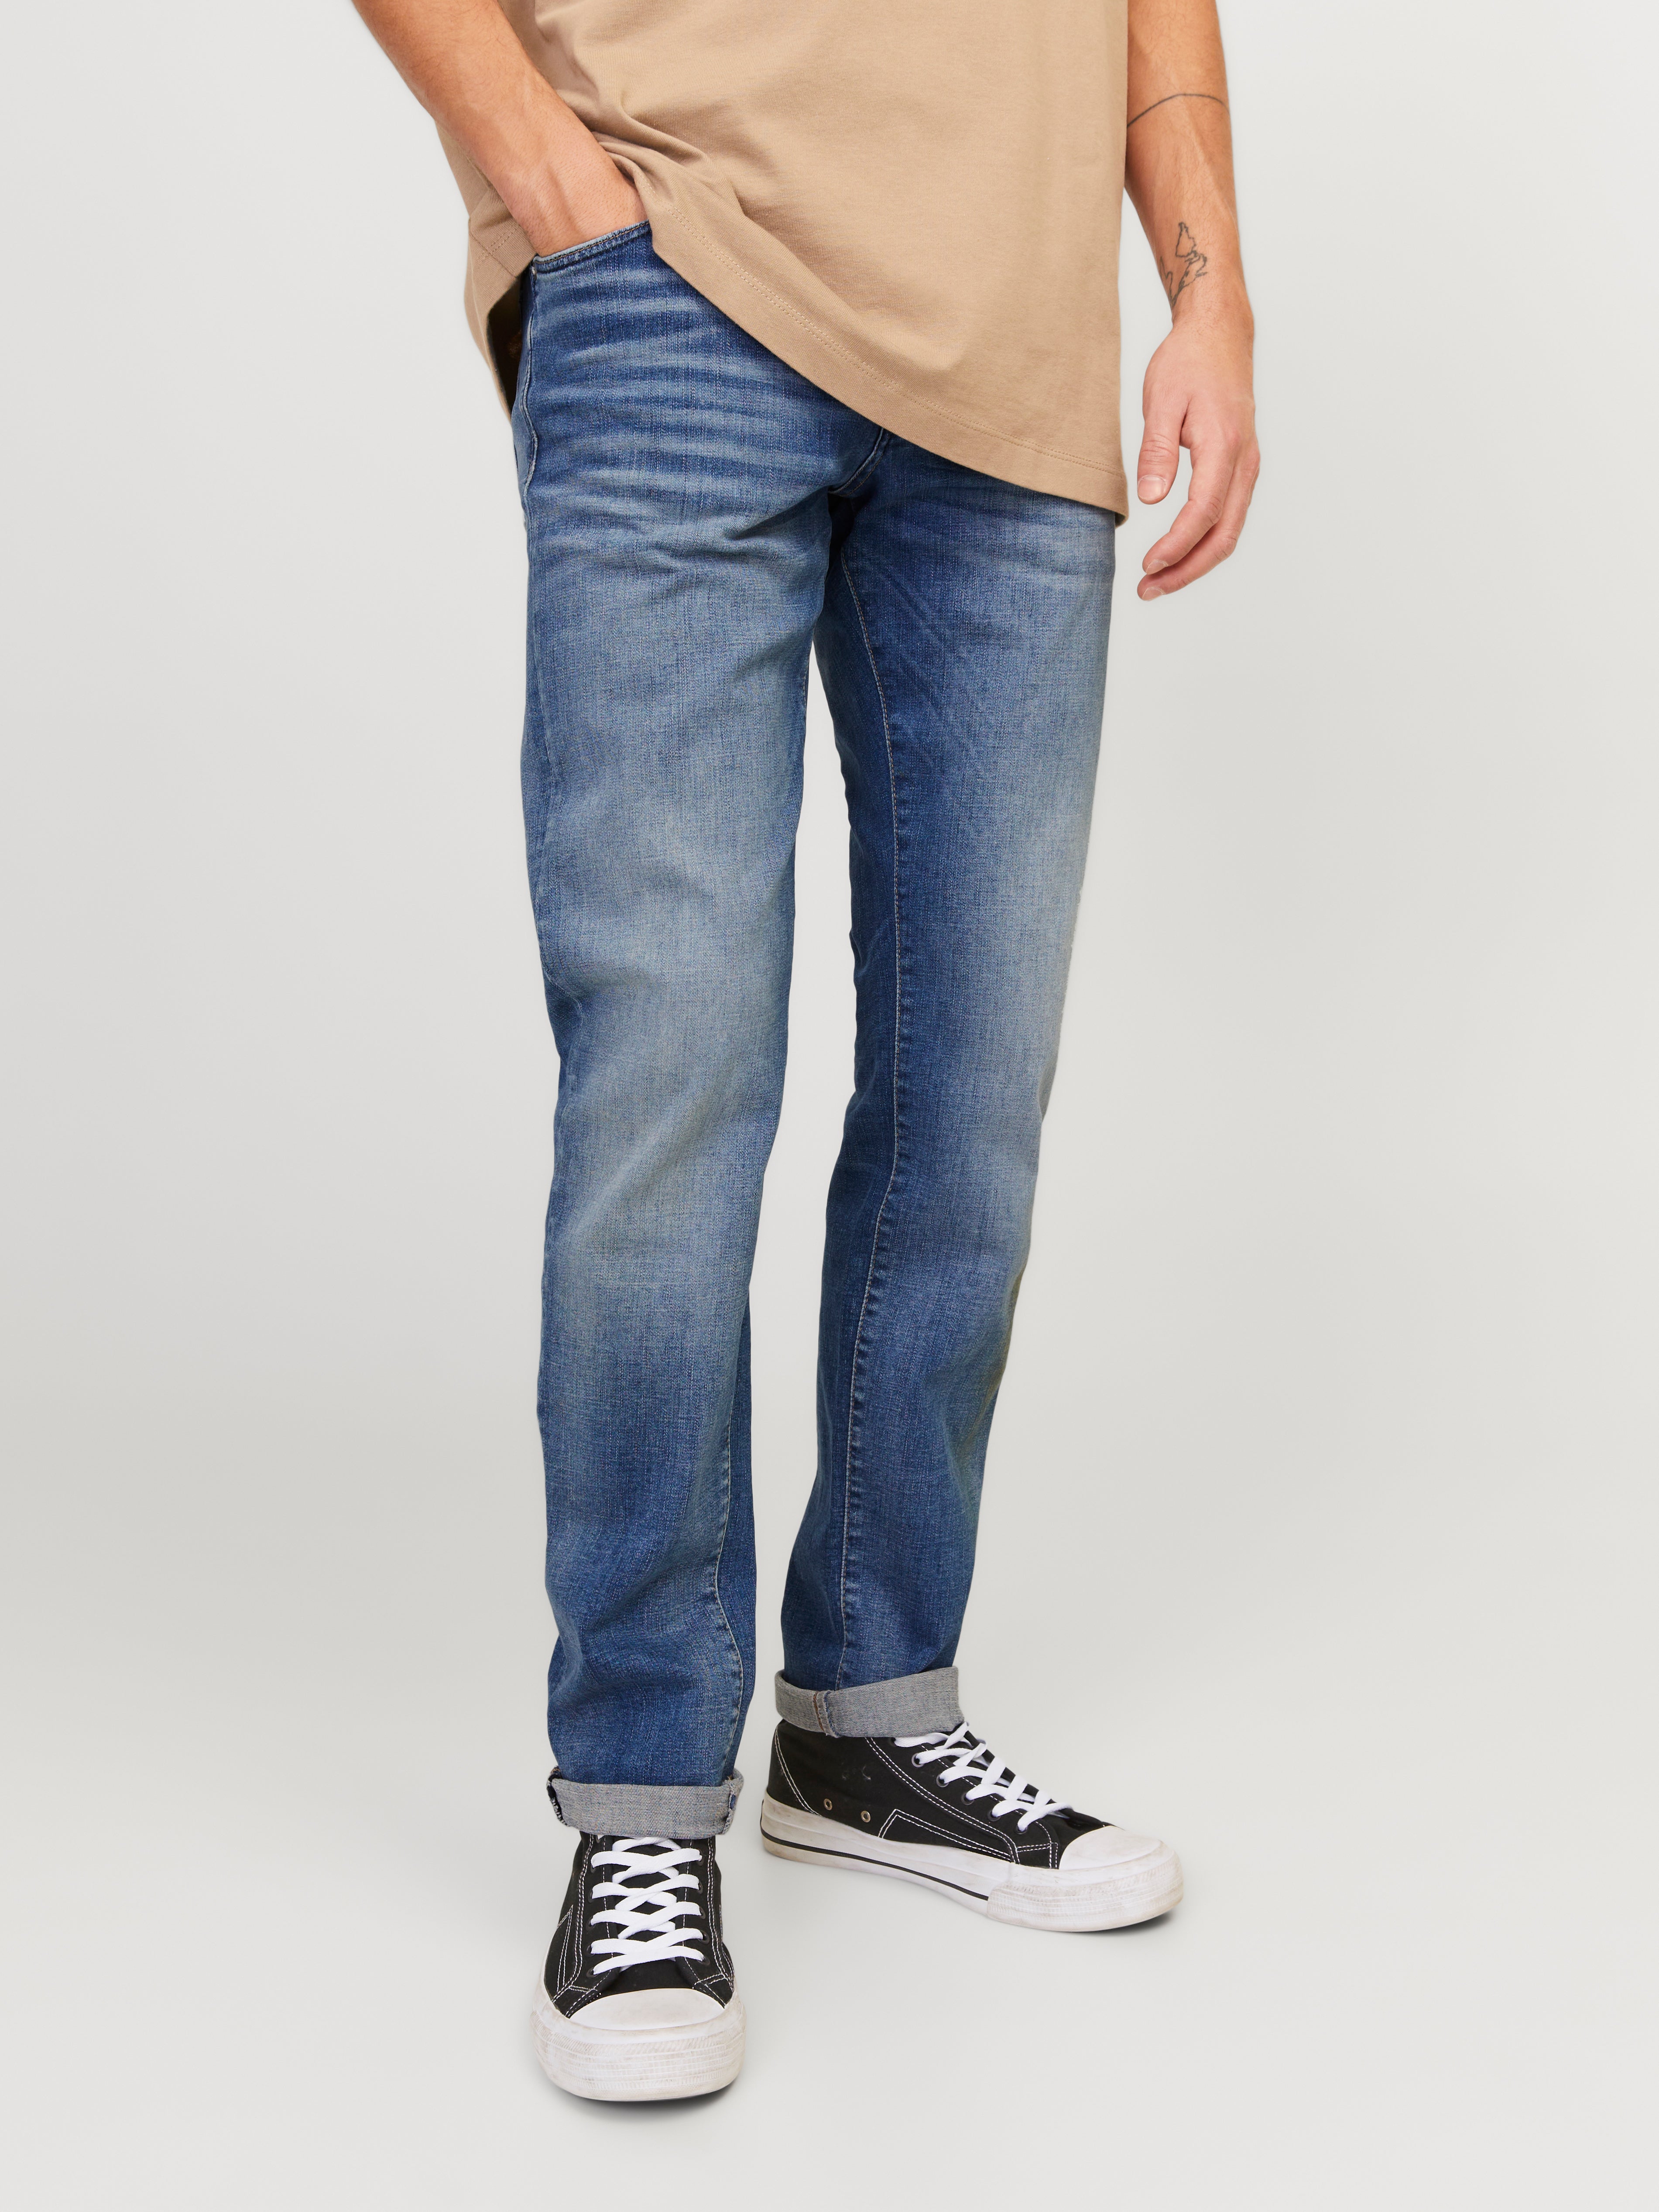 Slim Jeans - Light denim blue - Men | H&M US